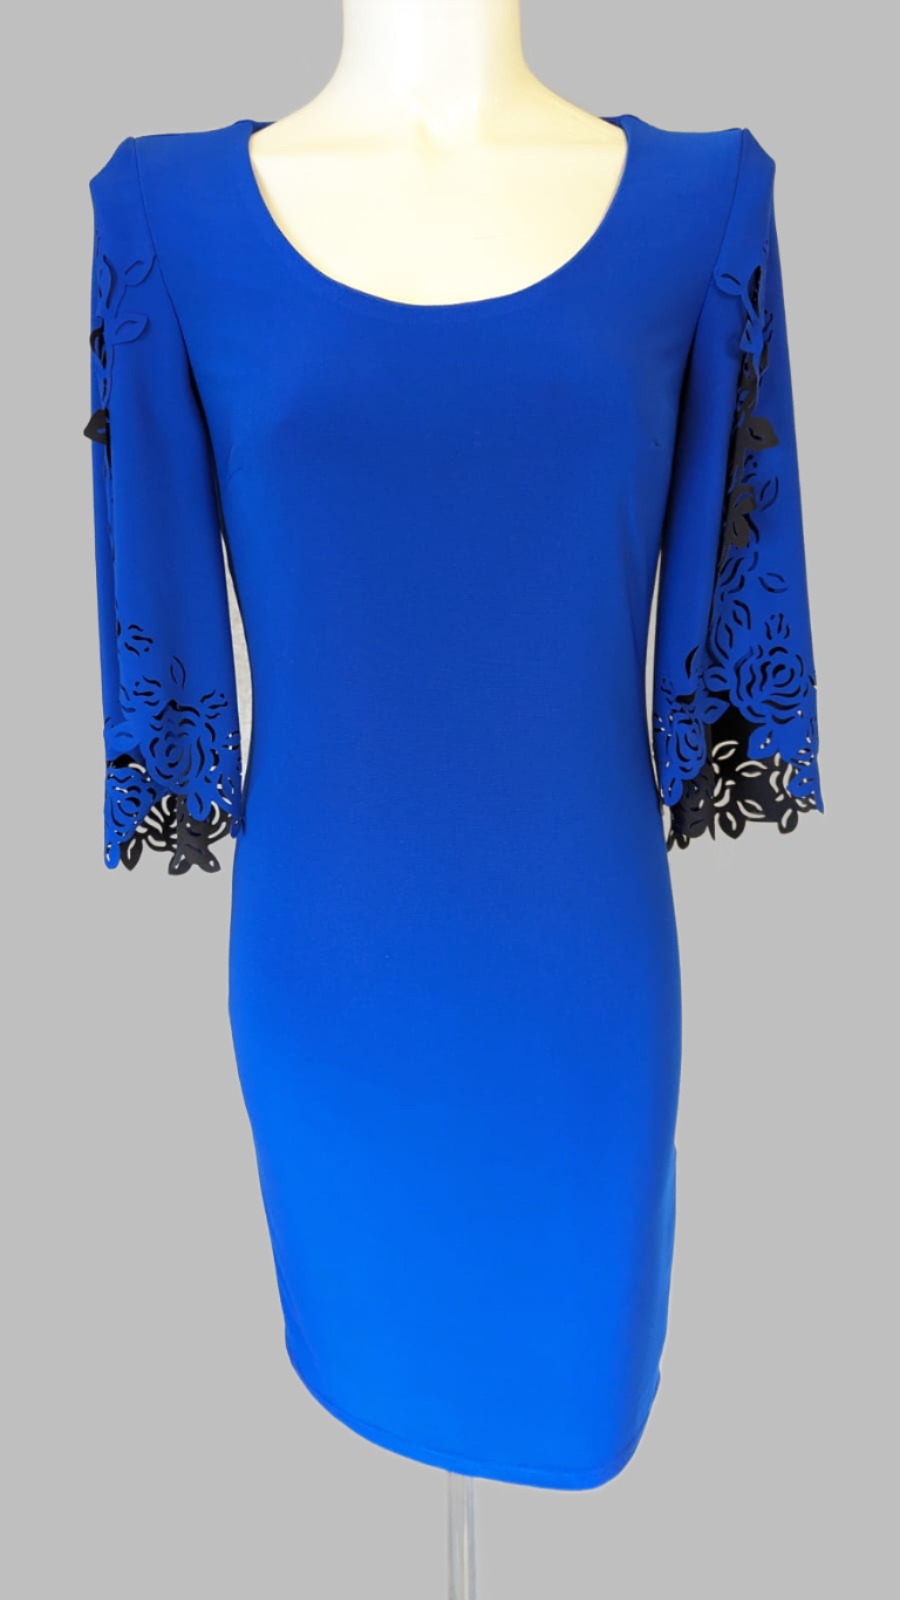 Joseph Ribkoff - Dress - Blue - Size 8